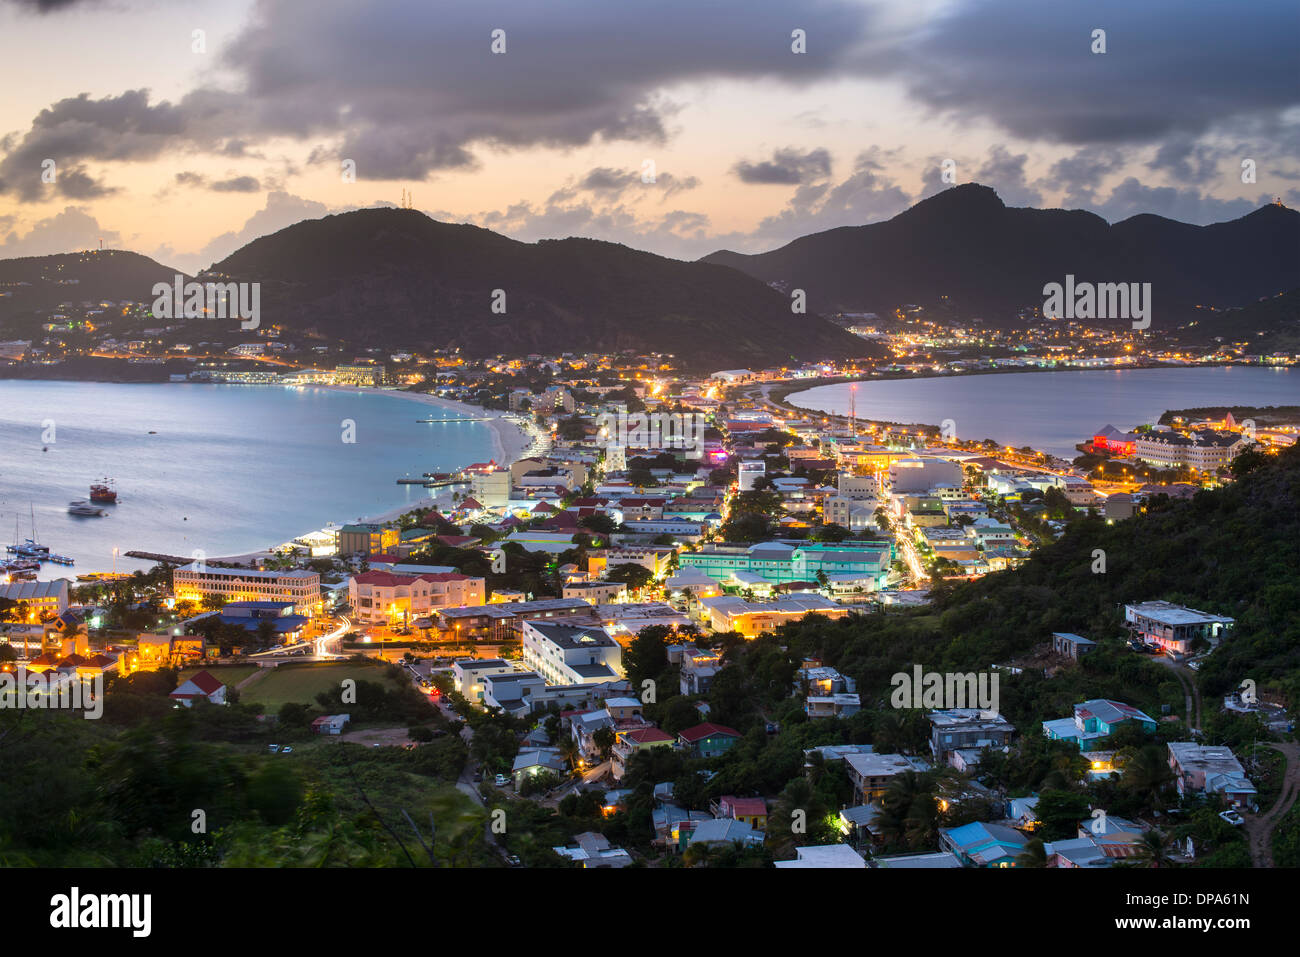 Philipsburg, Sint Maarten in the Caribbean. Stock Photo